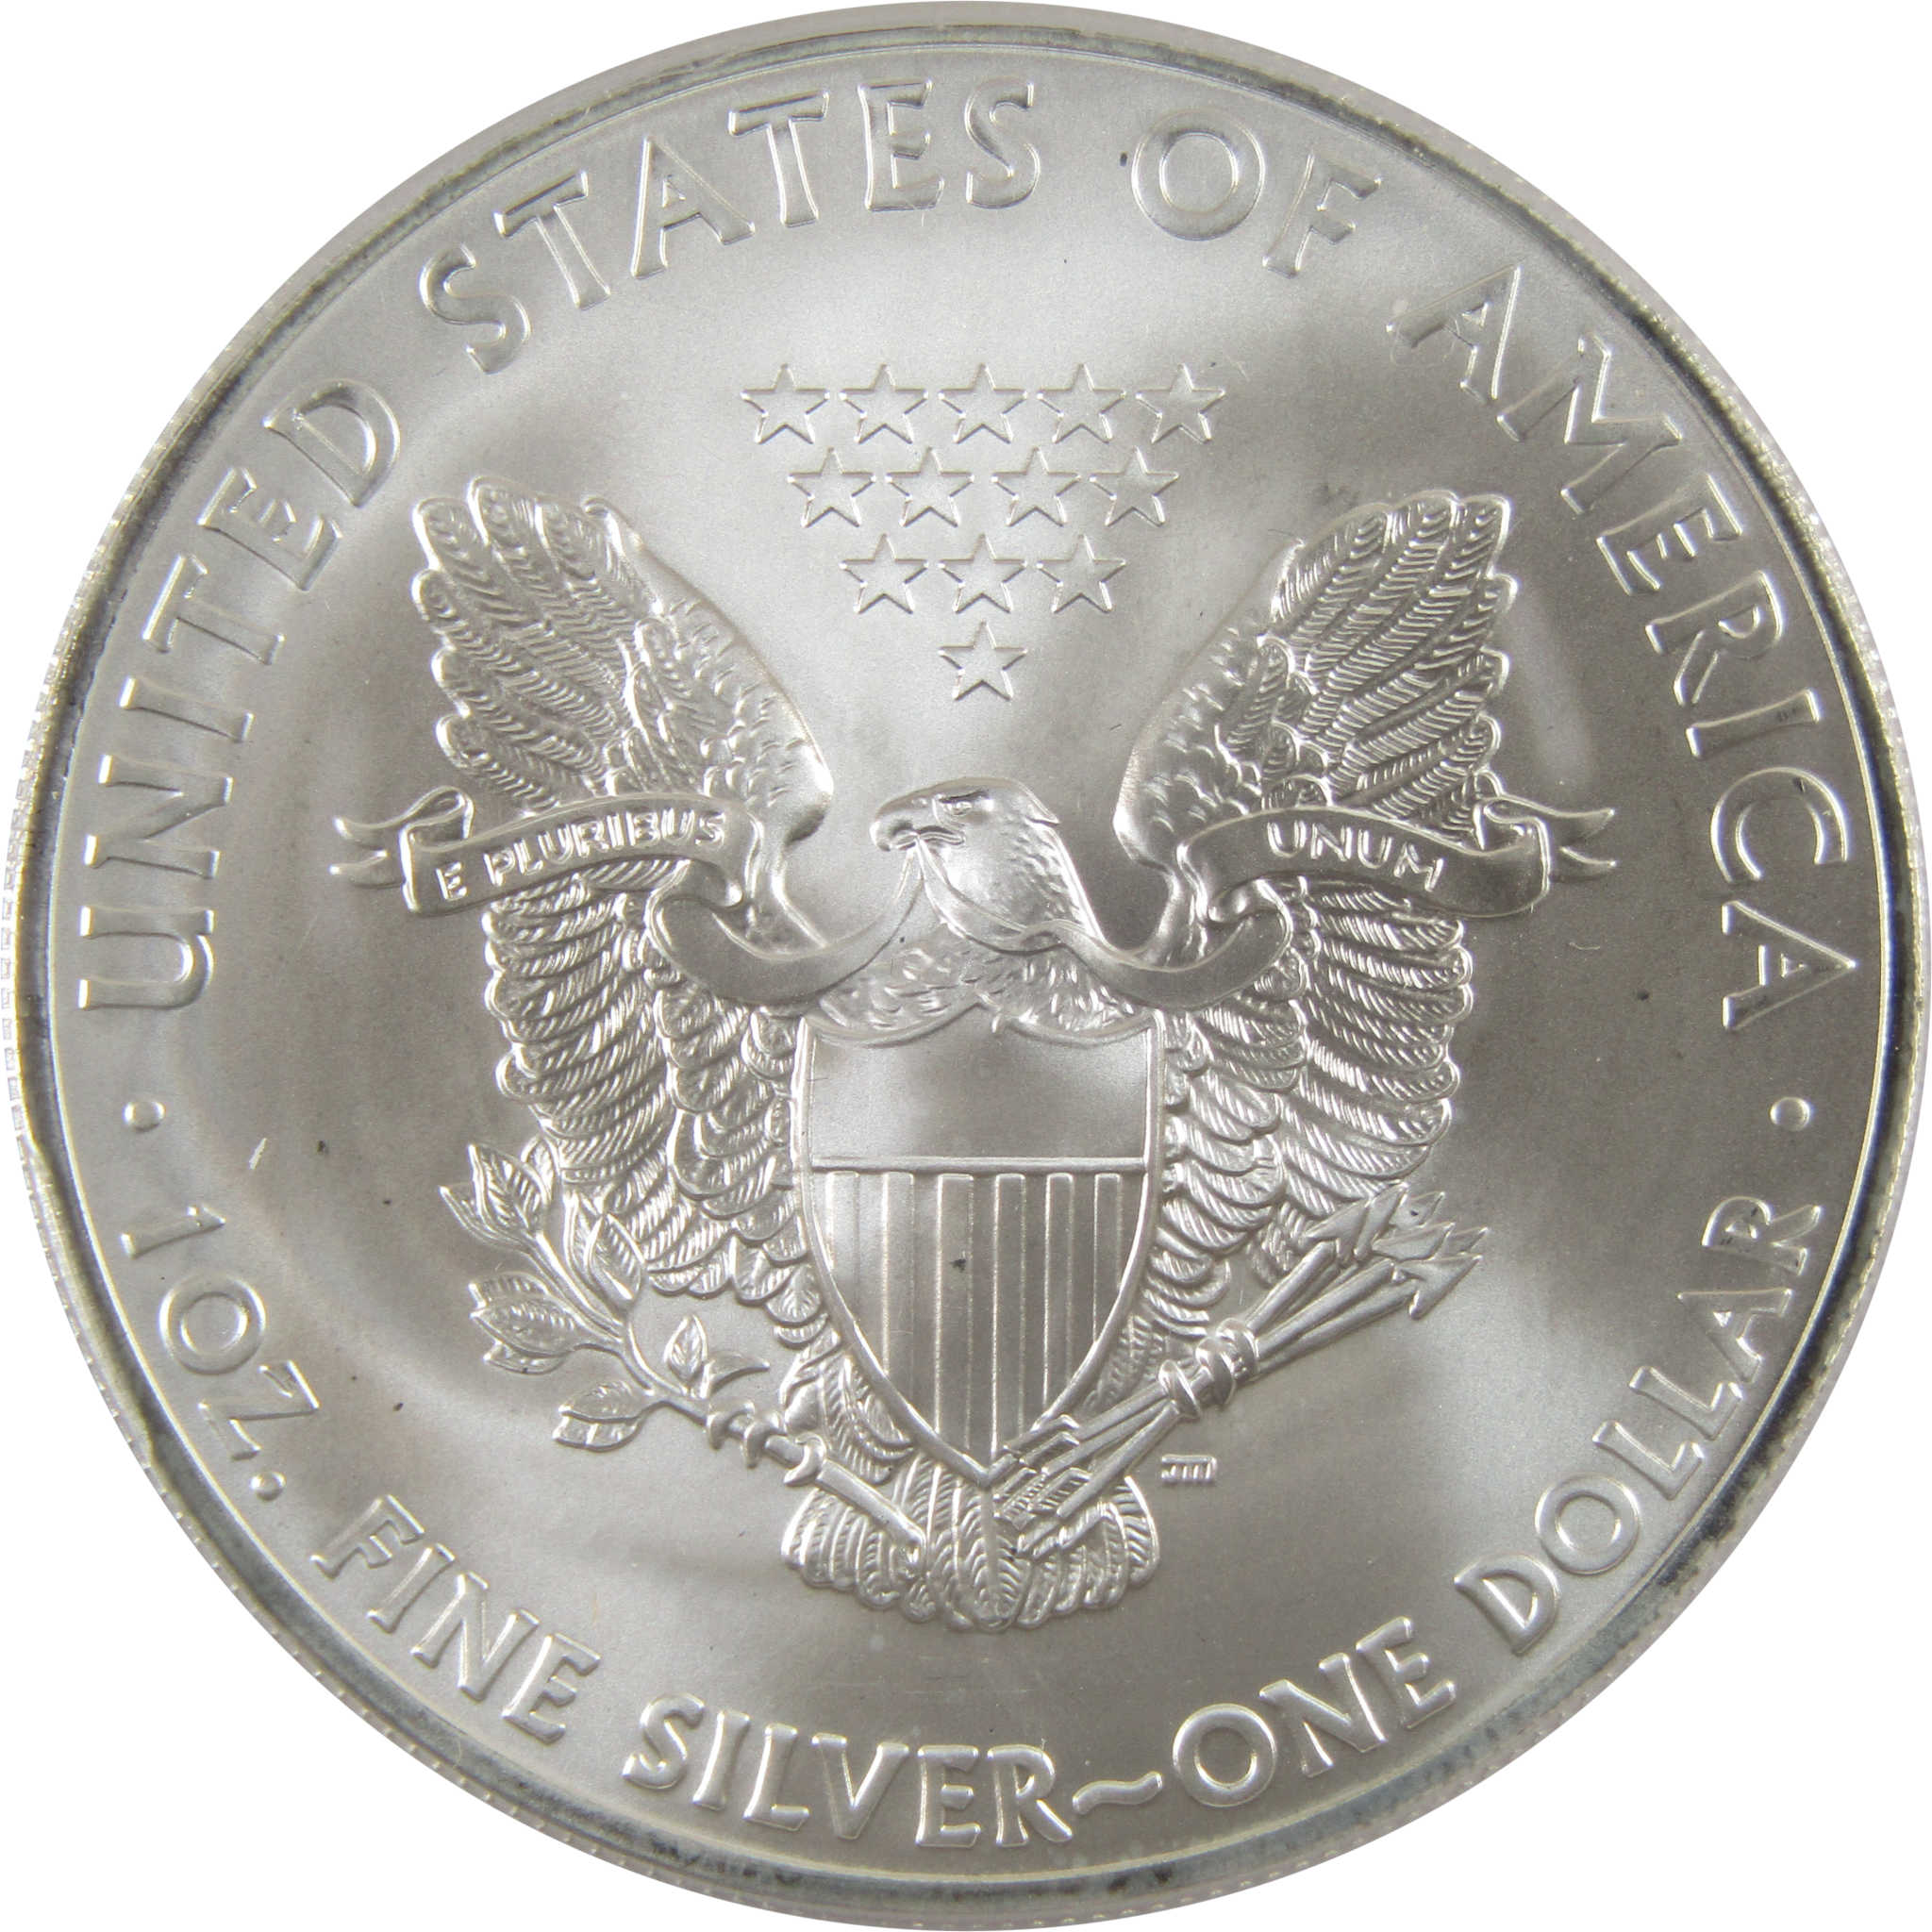 2014 (S) American Eagle Dollar MS 69 PCGS 1 oz .999 Silver SKU:CPC5768